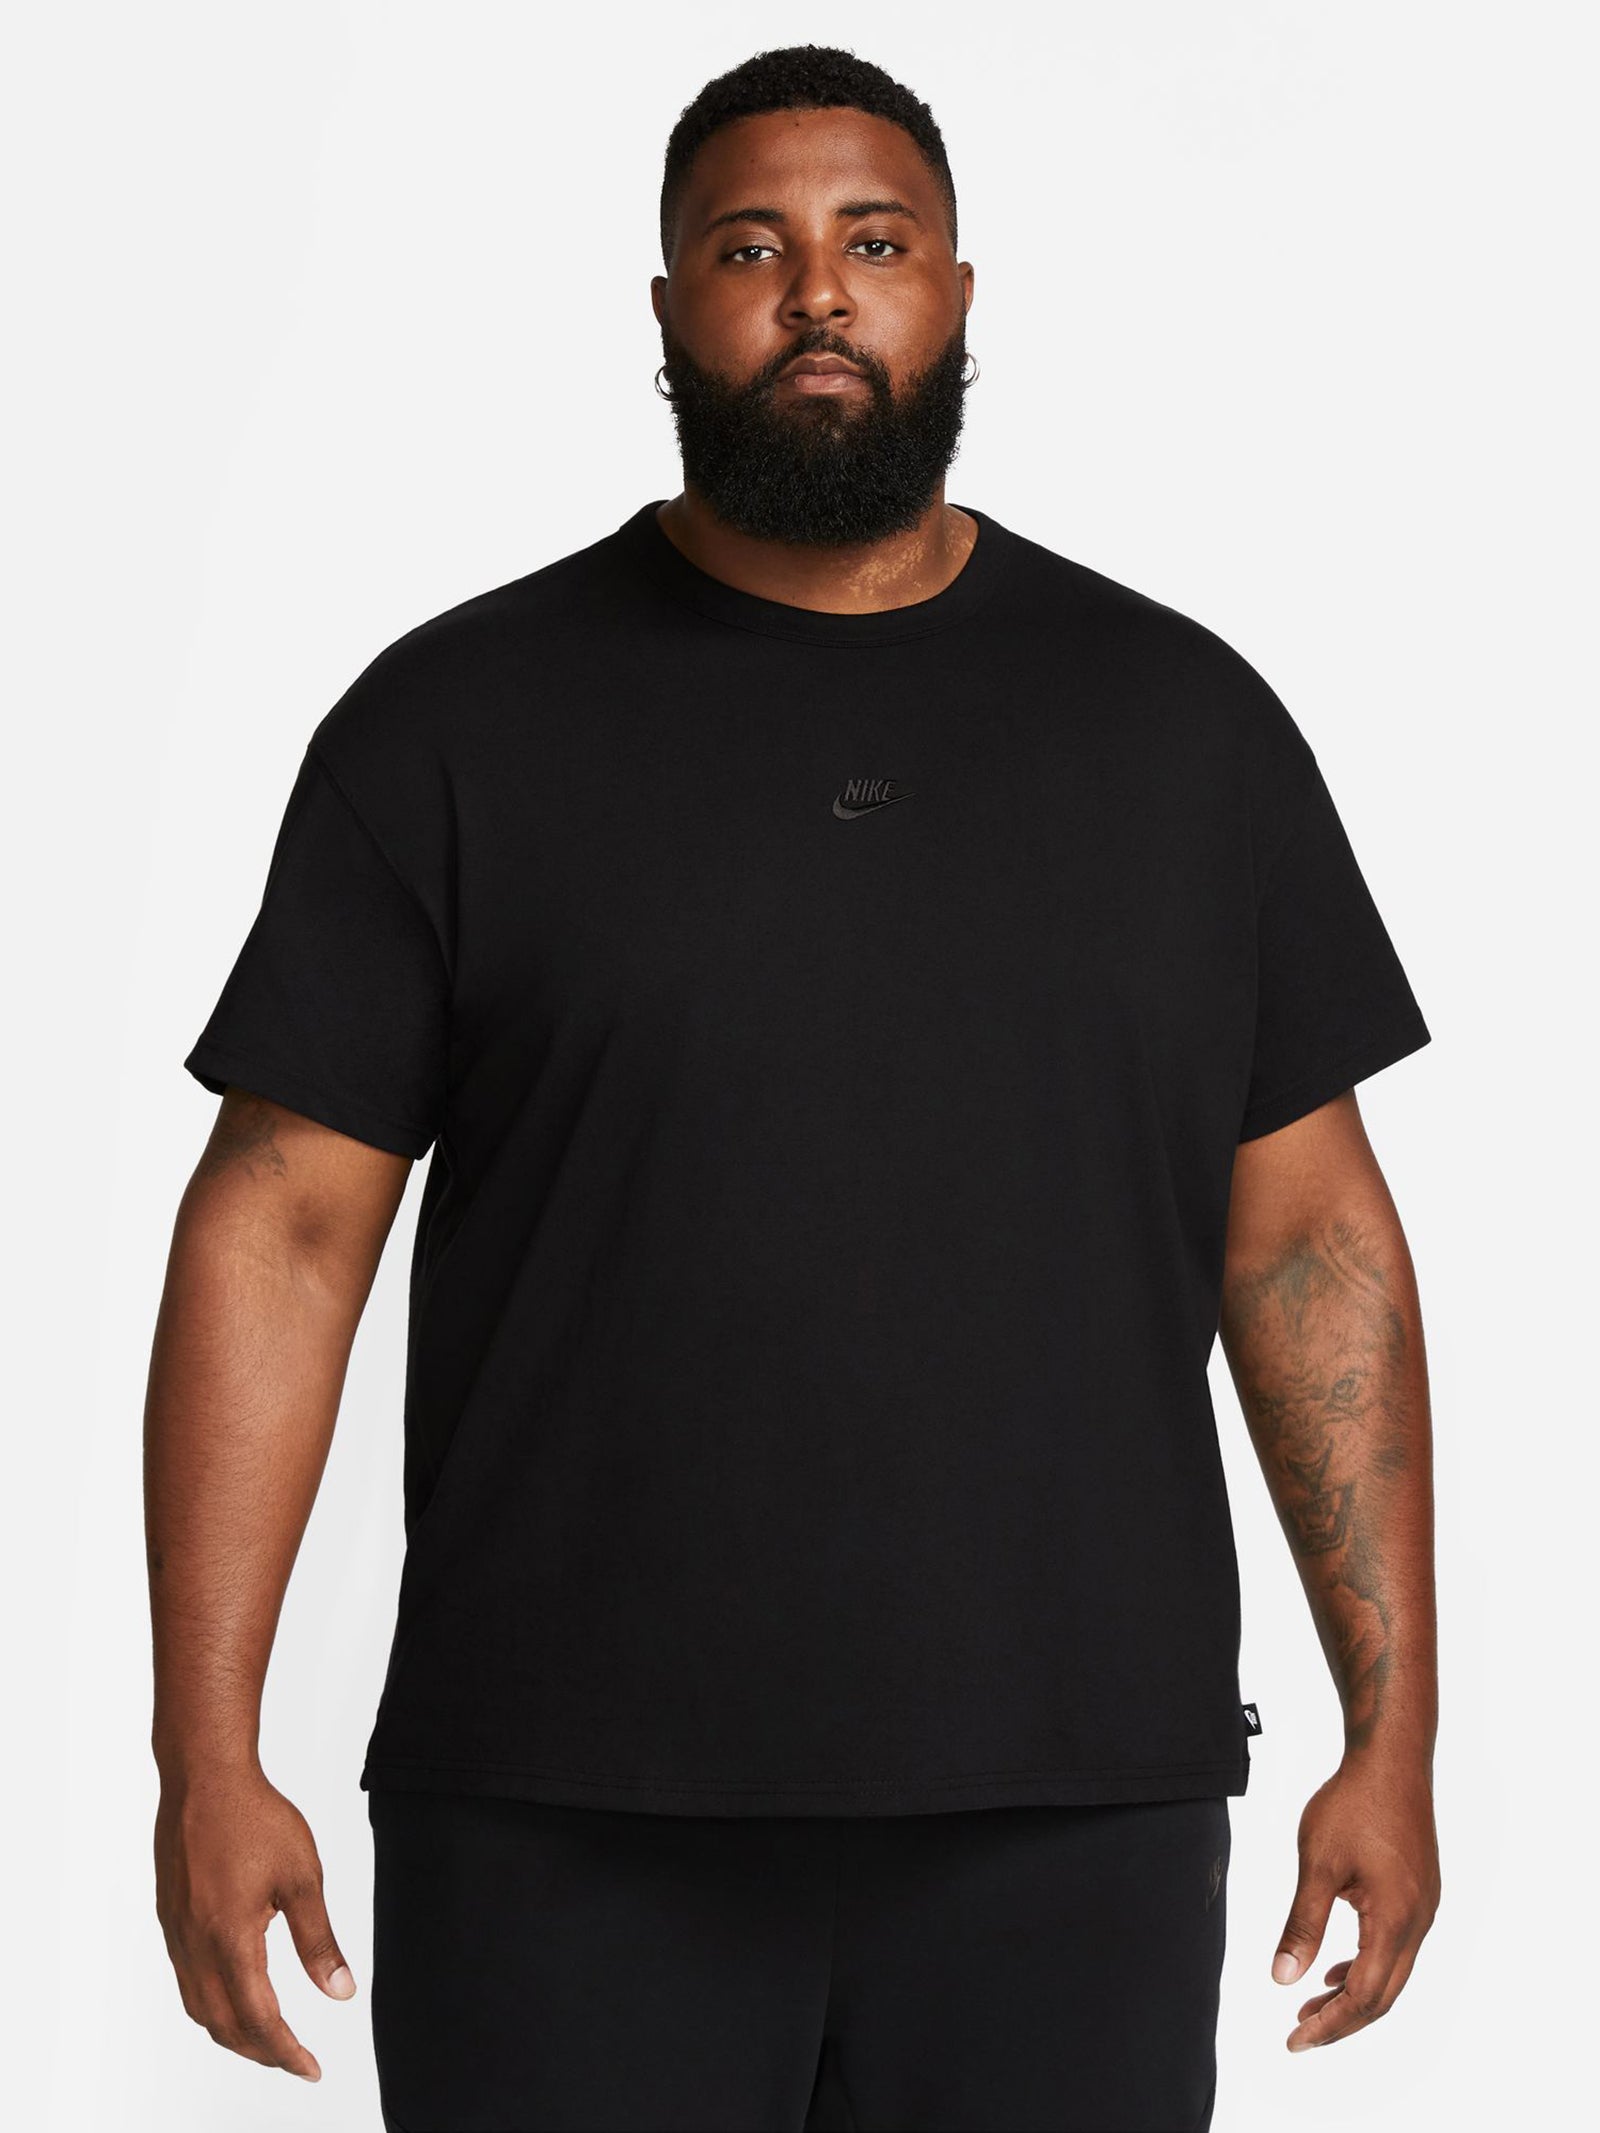 Nike Sportswear Premium Essentials Men's Long-Sleeve T-Shirt. Nike UK